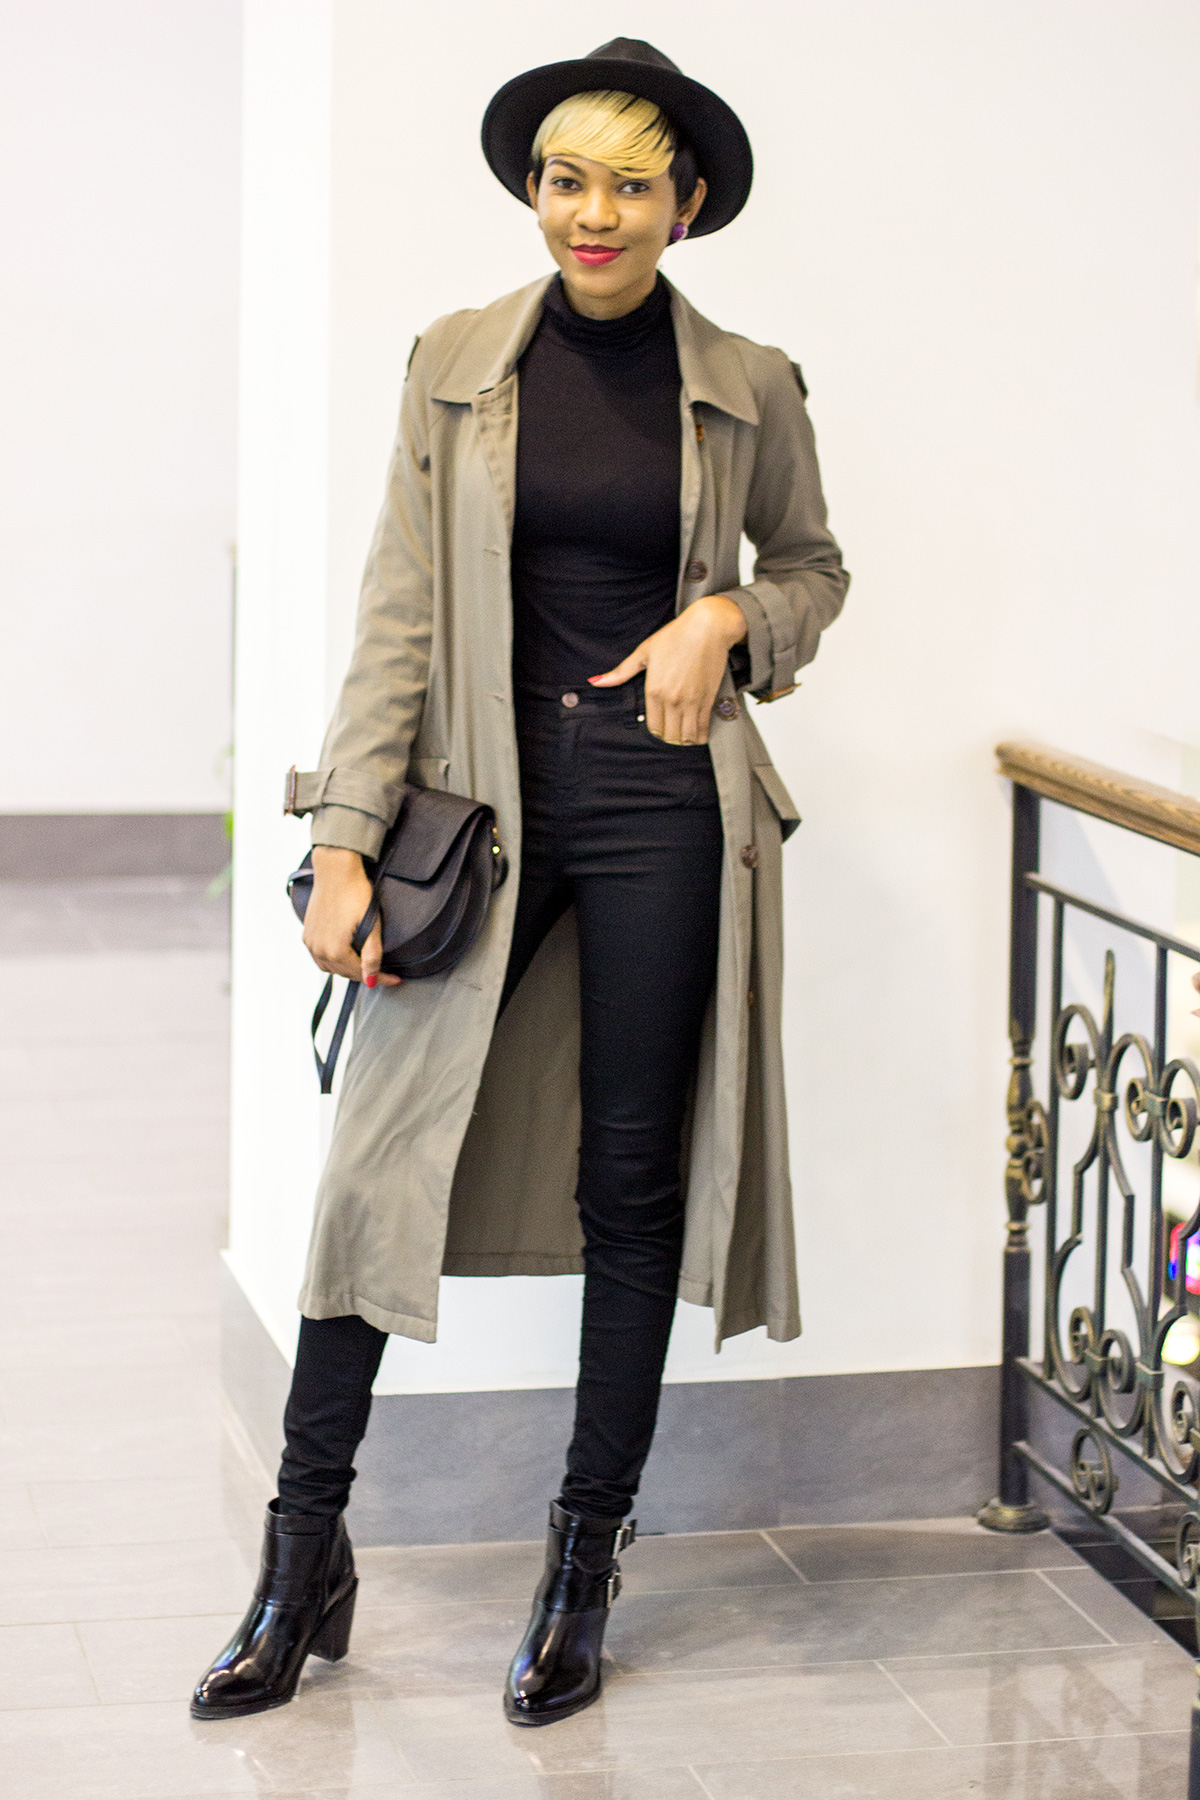 Khaki style chic look on fashion blogger of modavracha blog